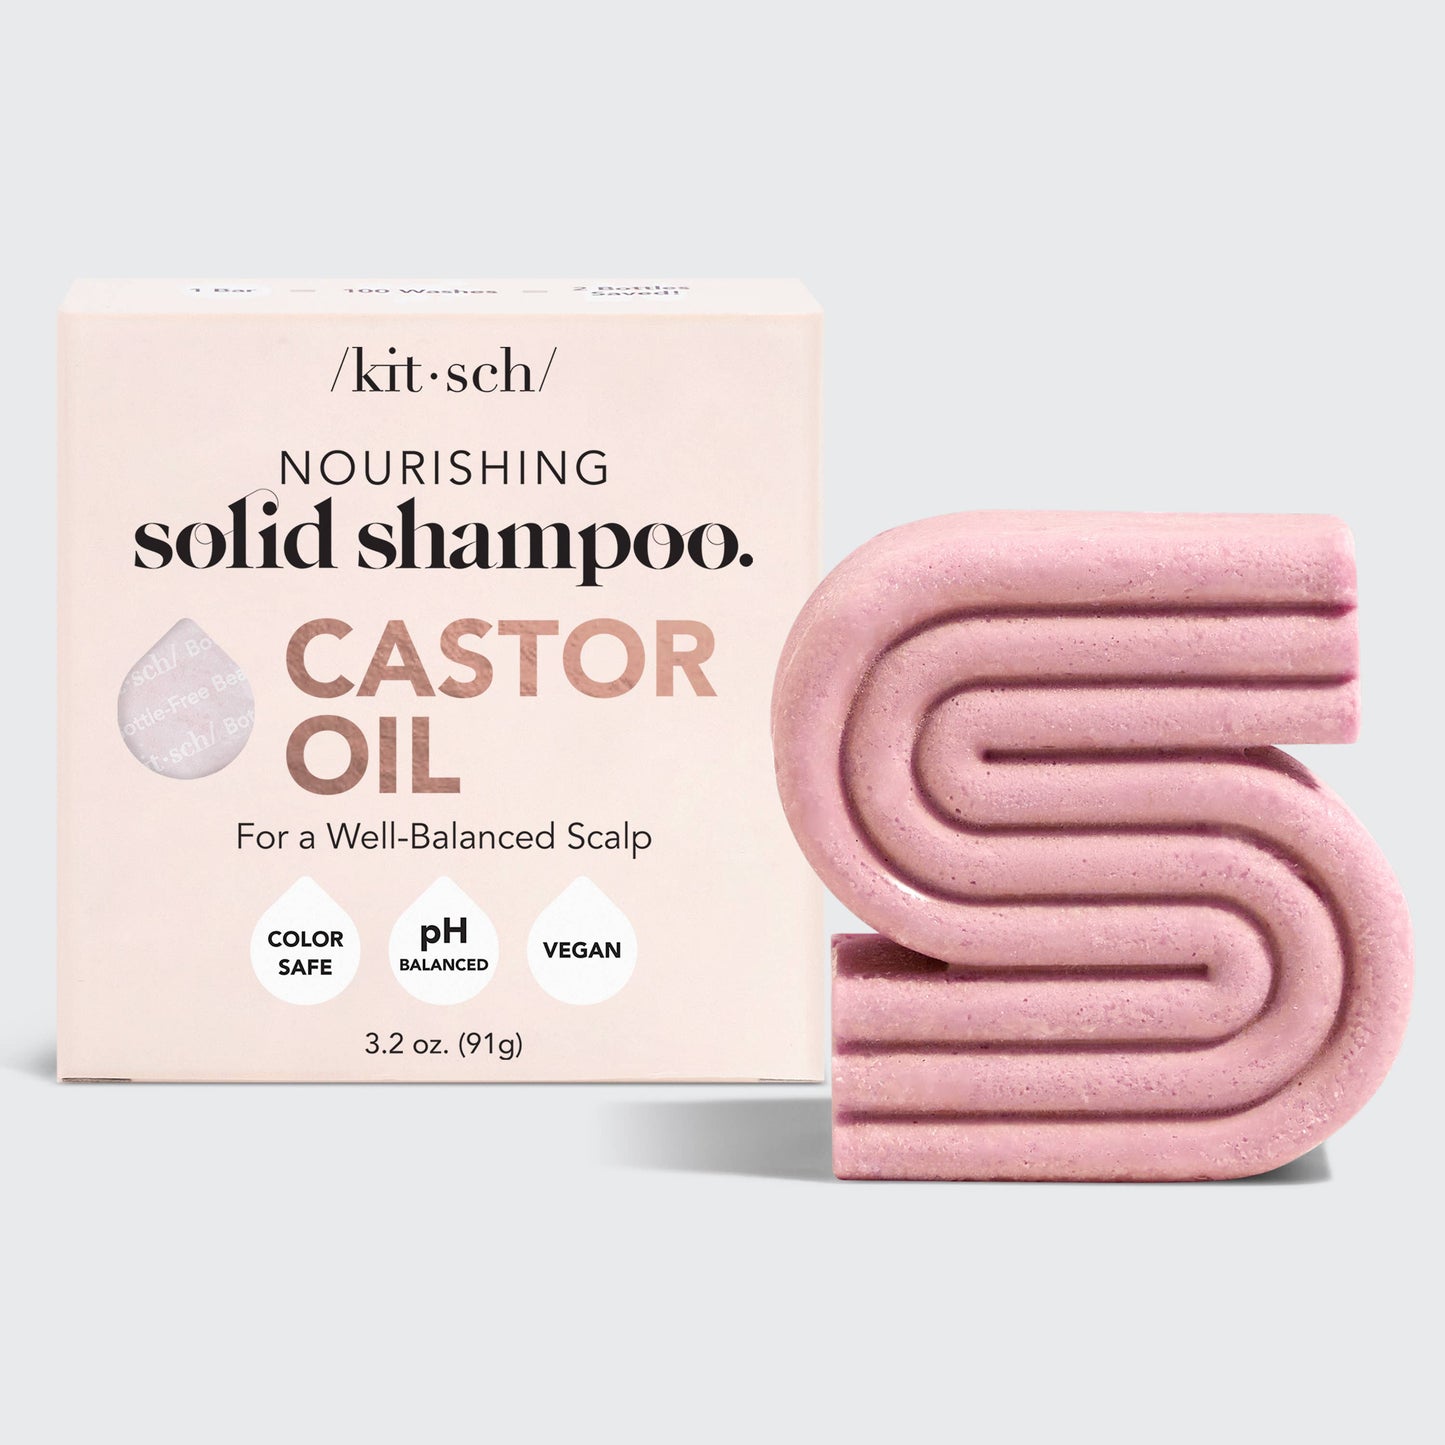 Kitsch- Castor Oil Nourishing Shampoo Bar